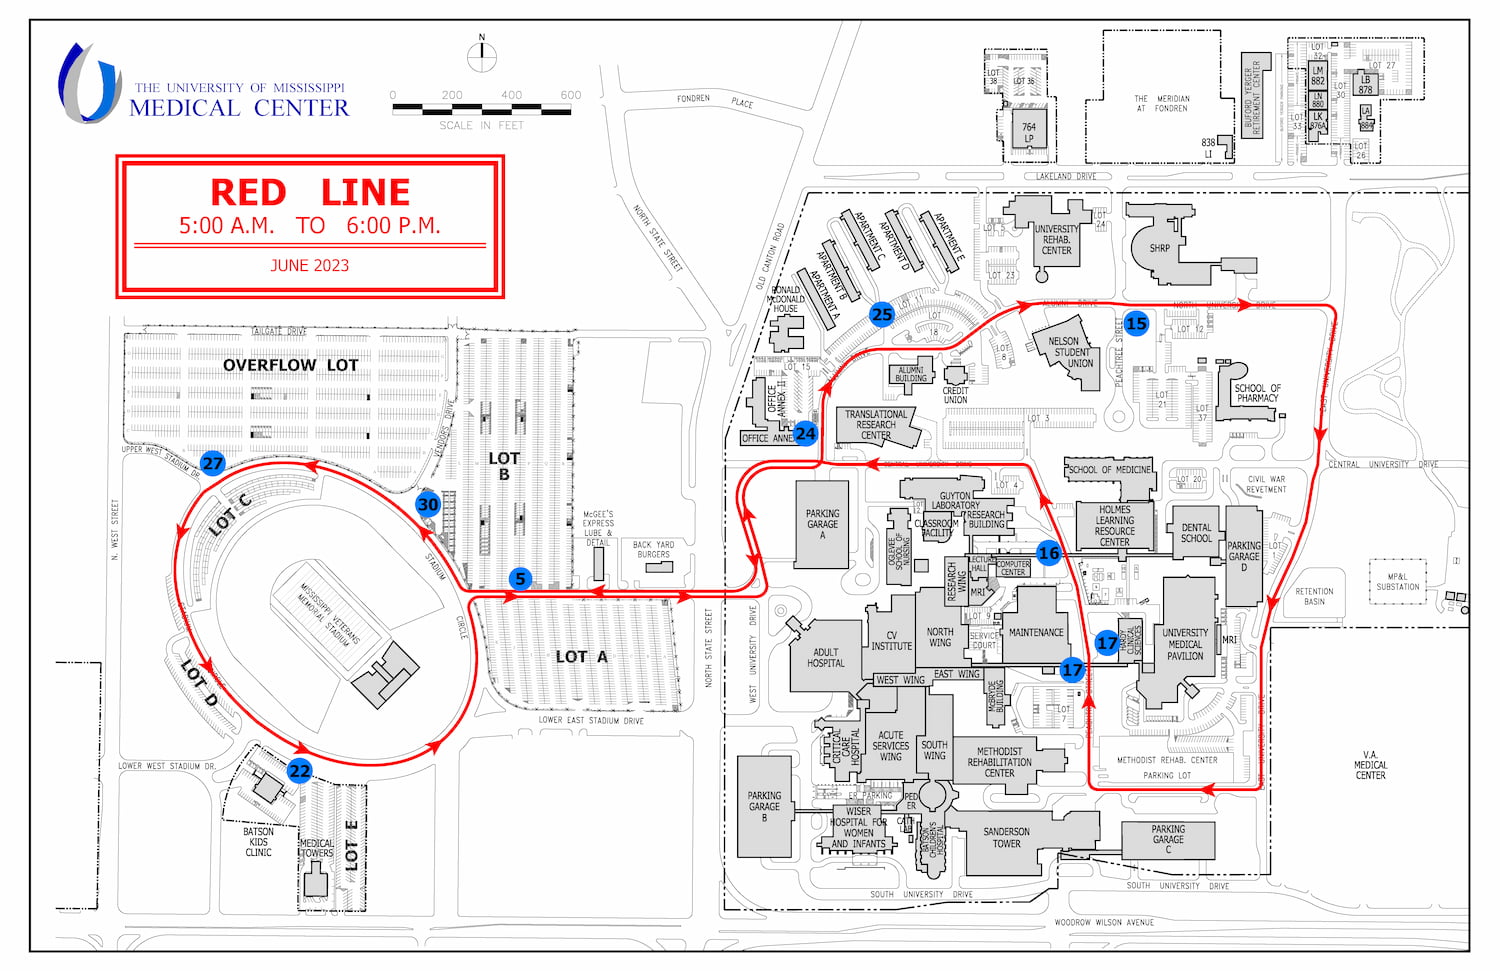 UMMC Parking Zones Map - click below for full image long description.